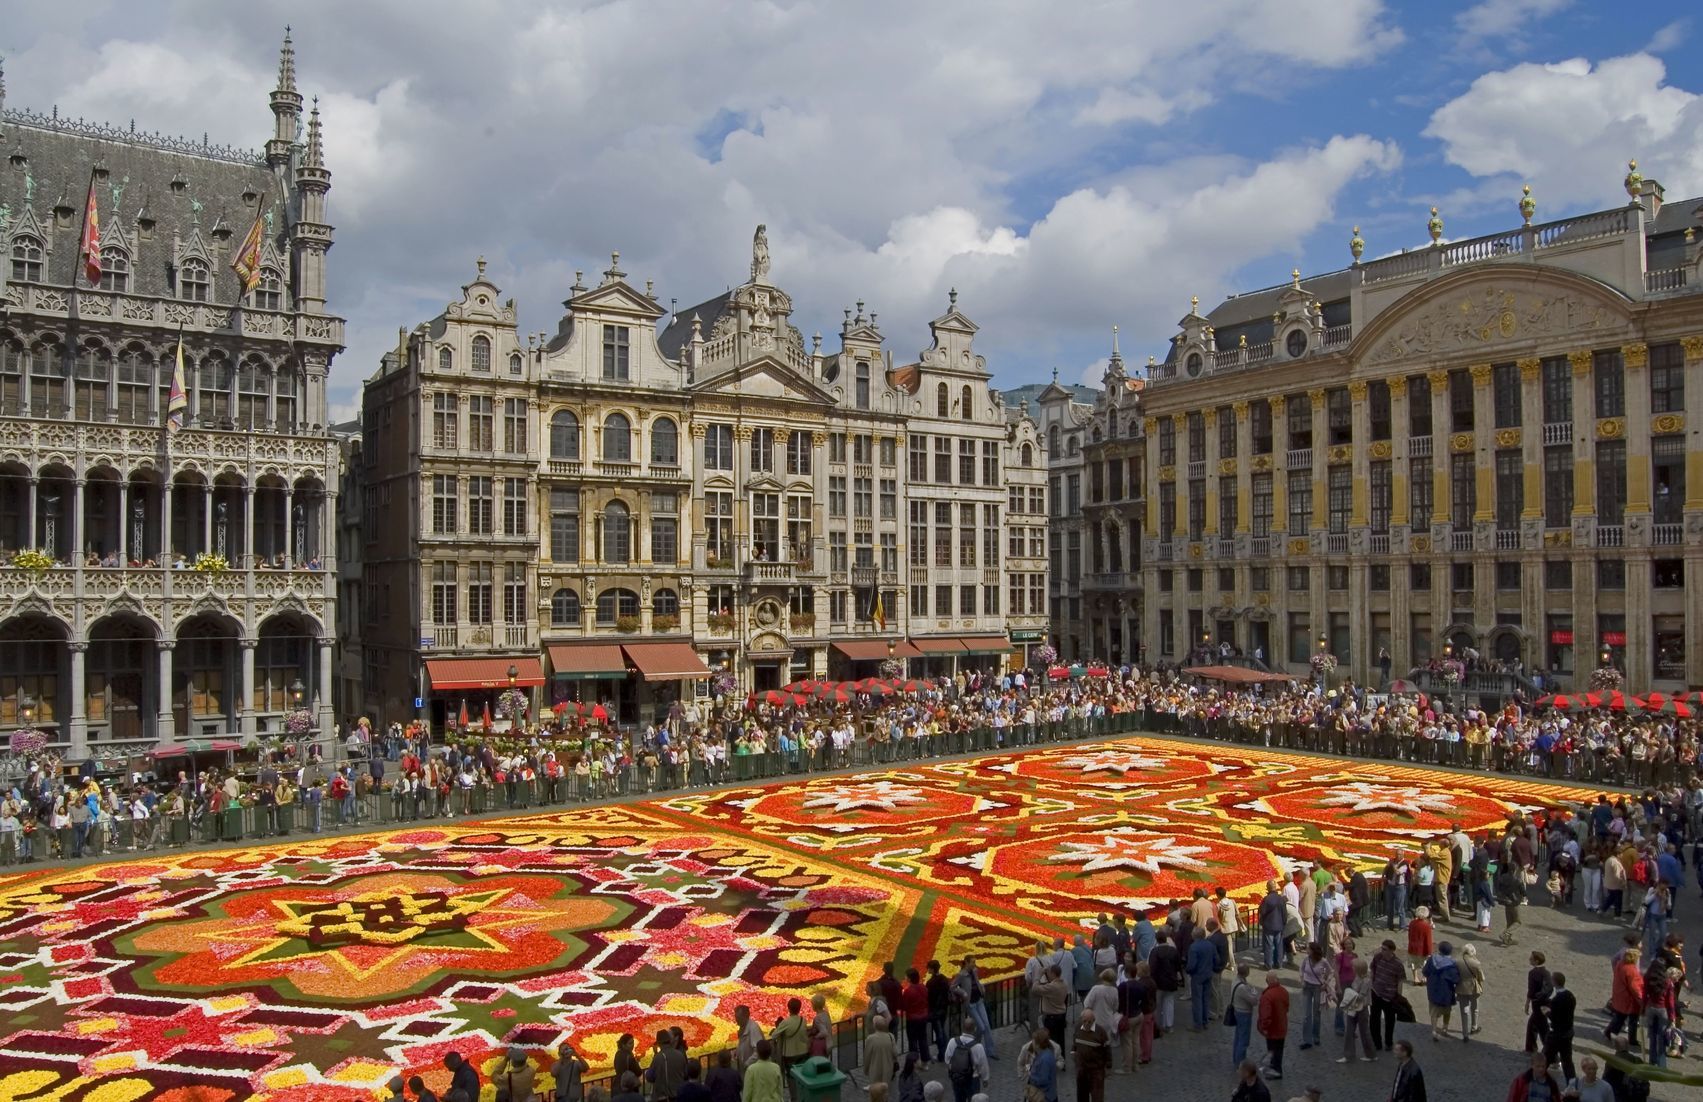 Květinový koberec v Bruselu | mchudo/123RF.com